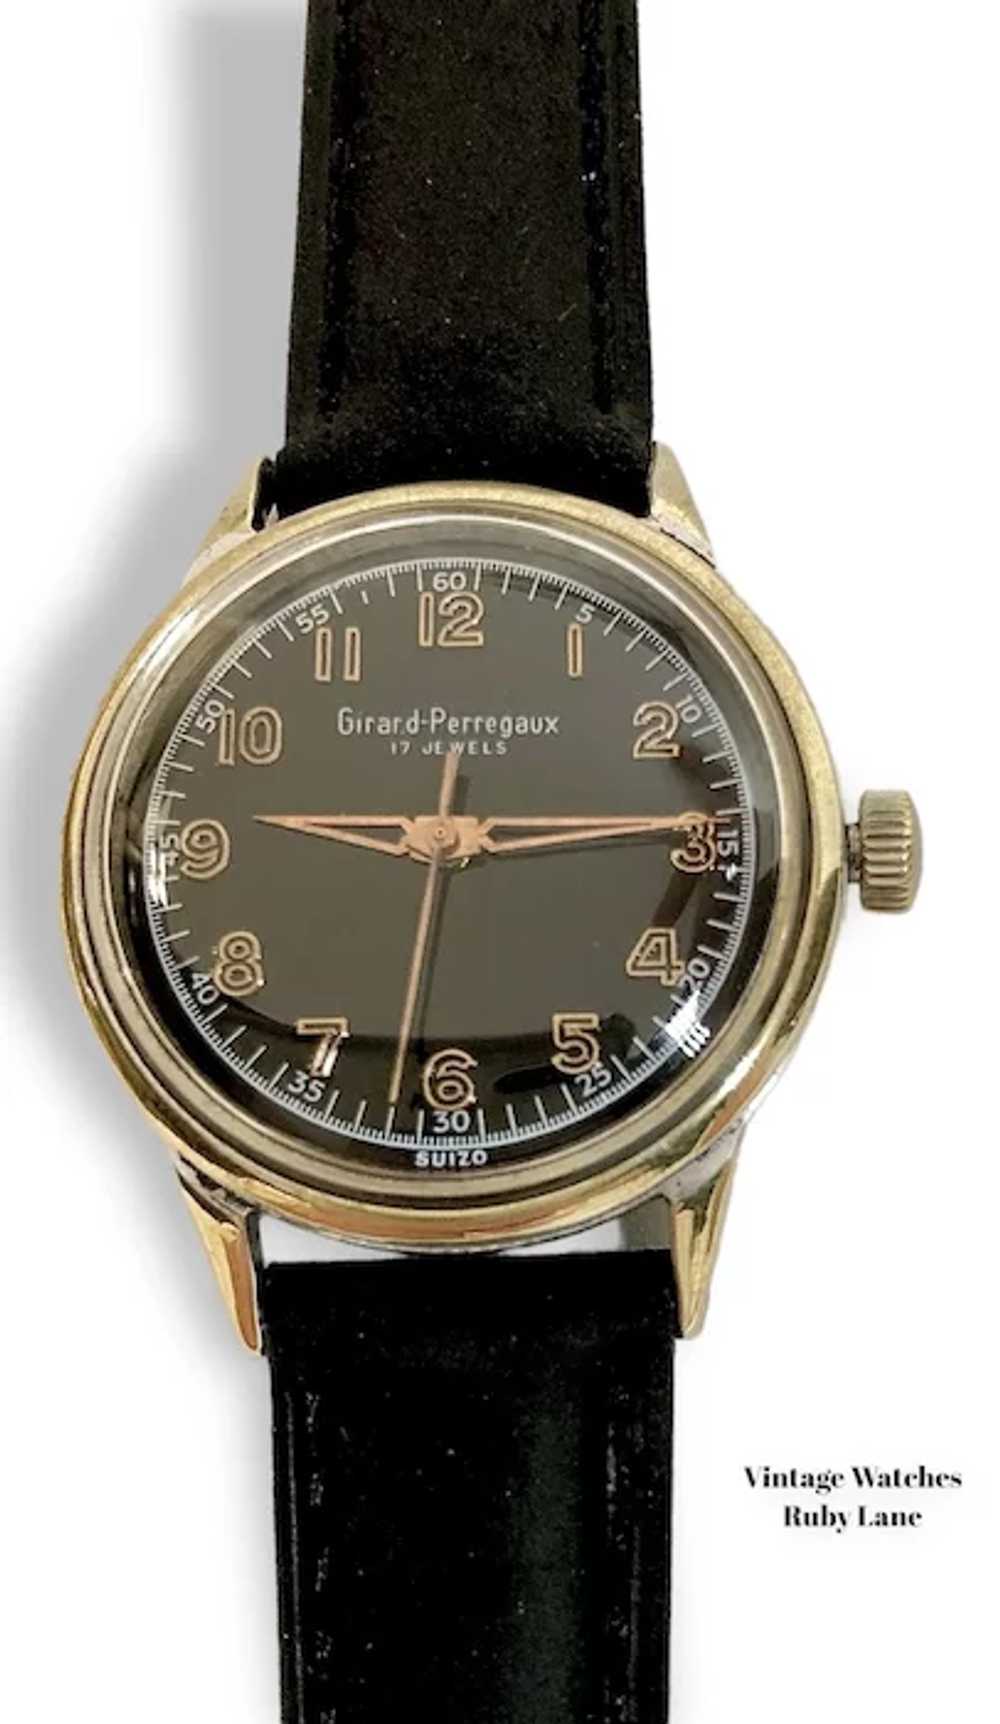 1947 Girard-Perregaux Military-Inspired Watch - image 7